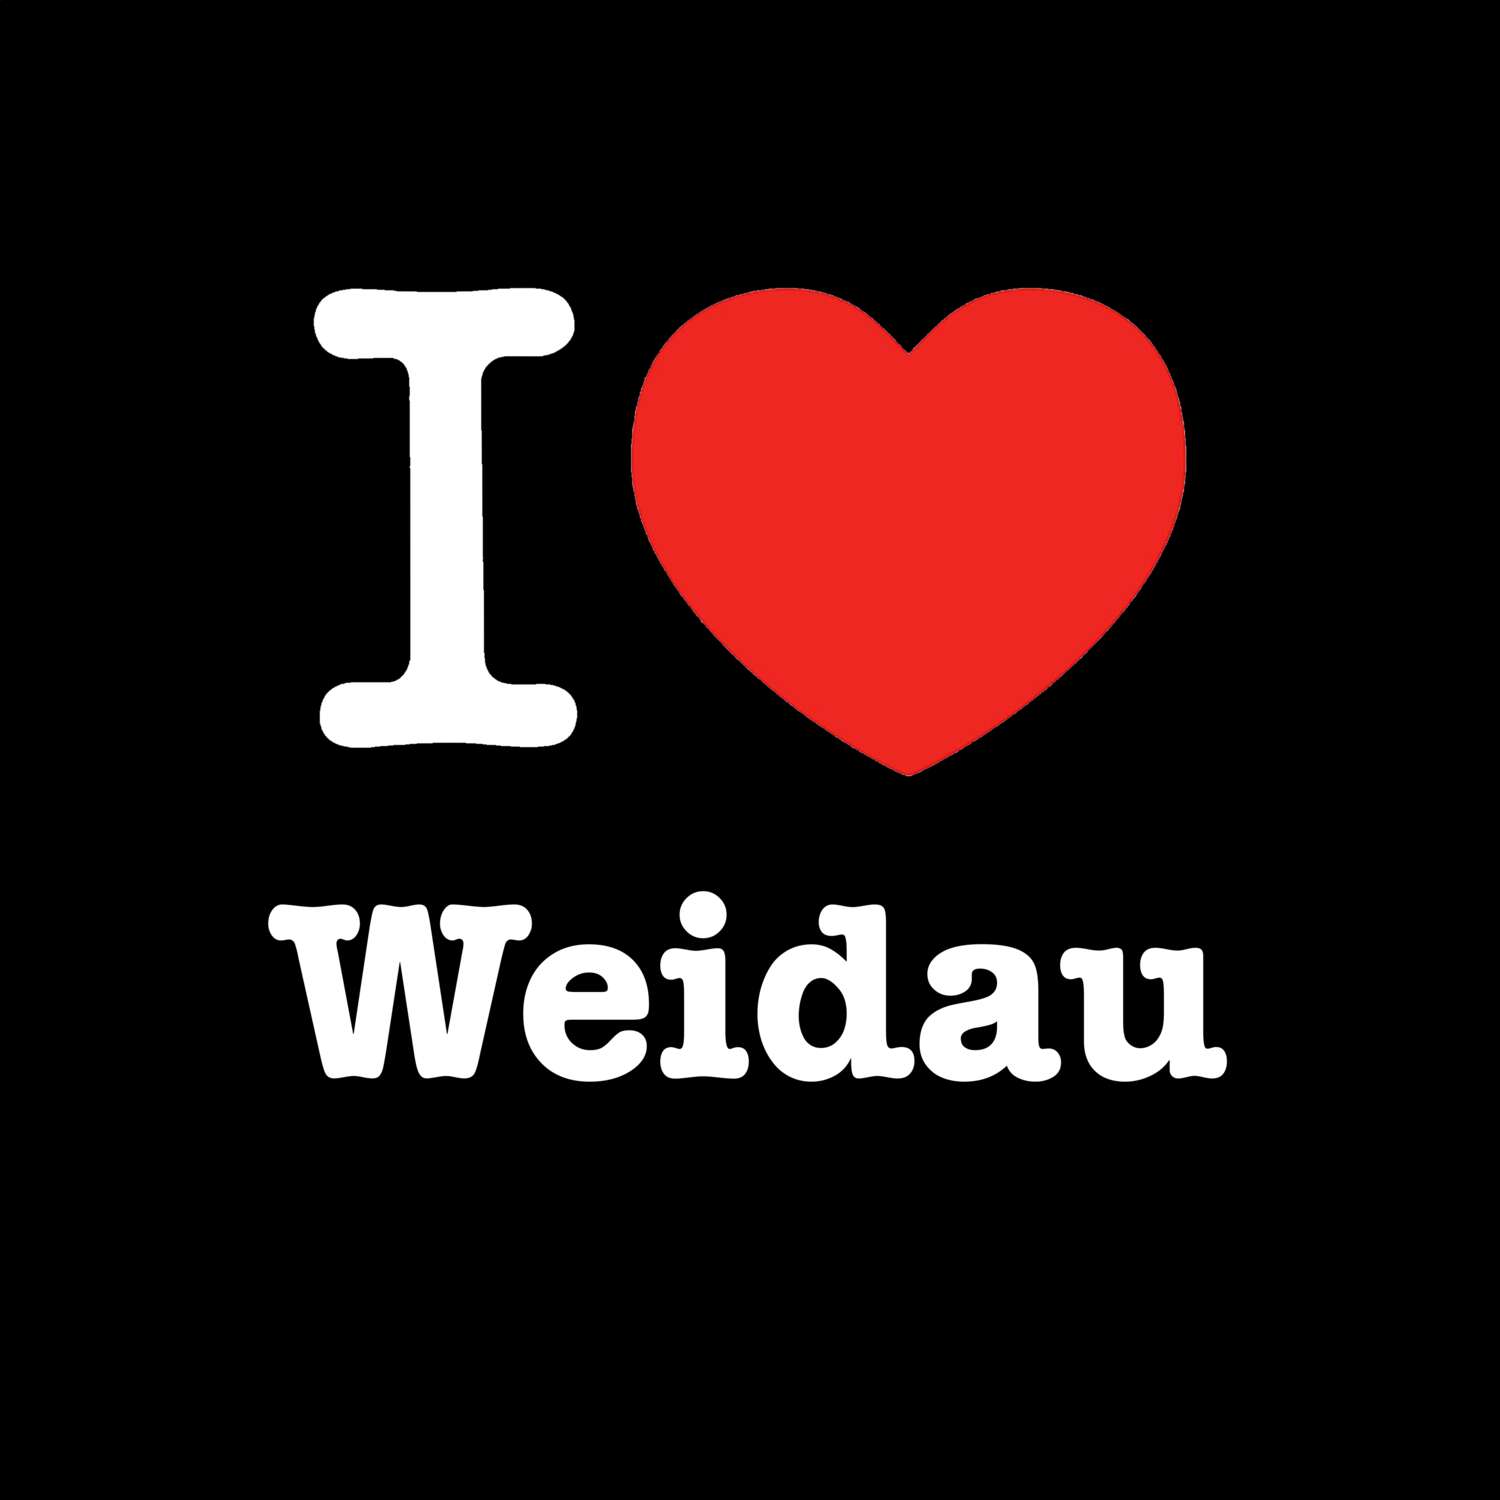 Weidau T-Shirt »I love«